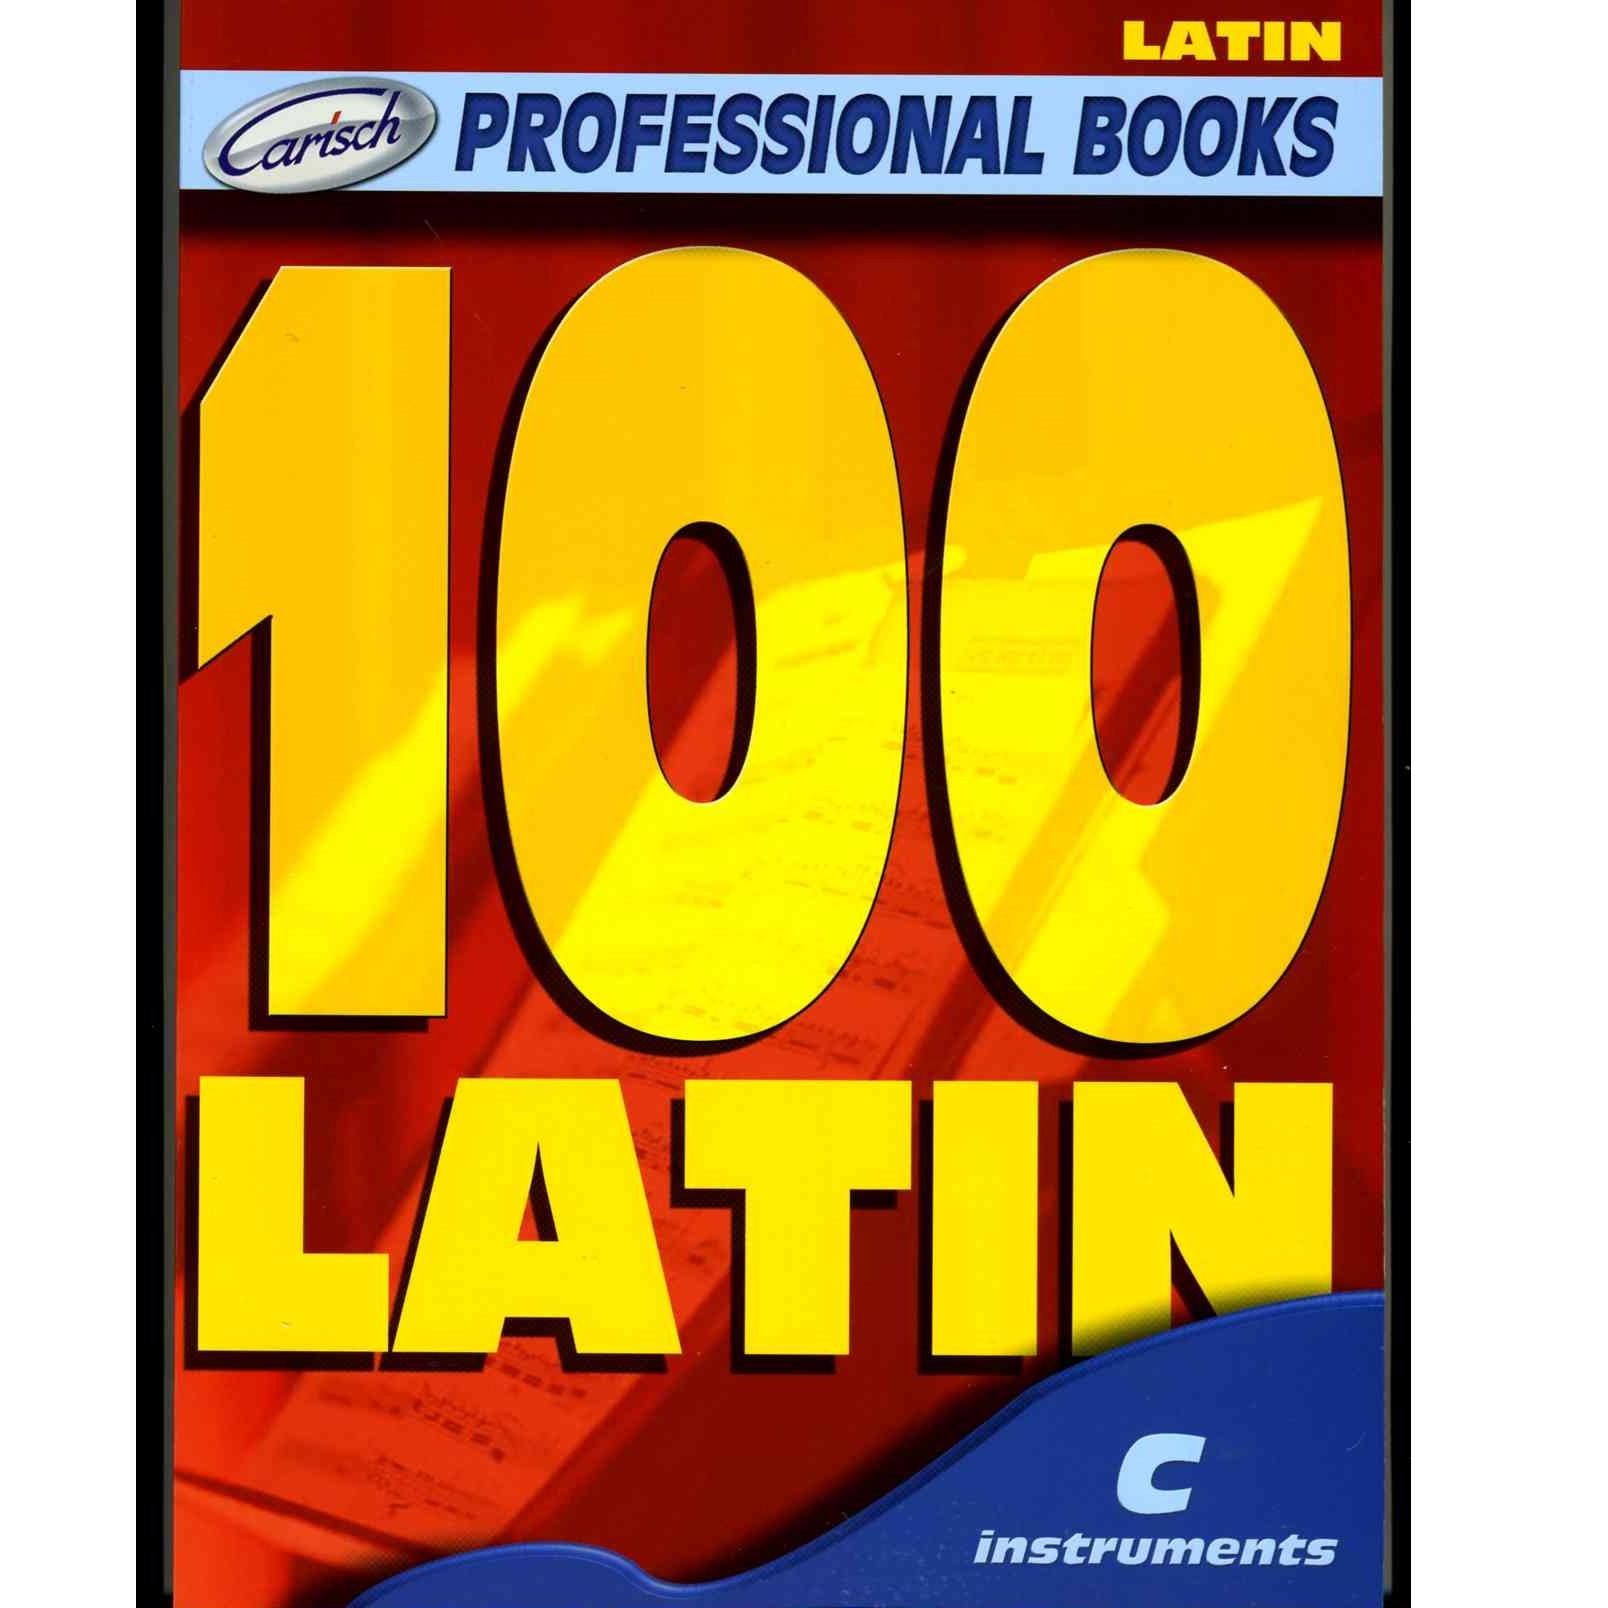 Professional Books 100 LATIN - Carisch